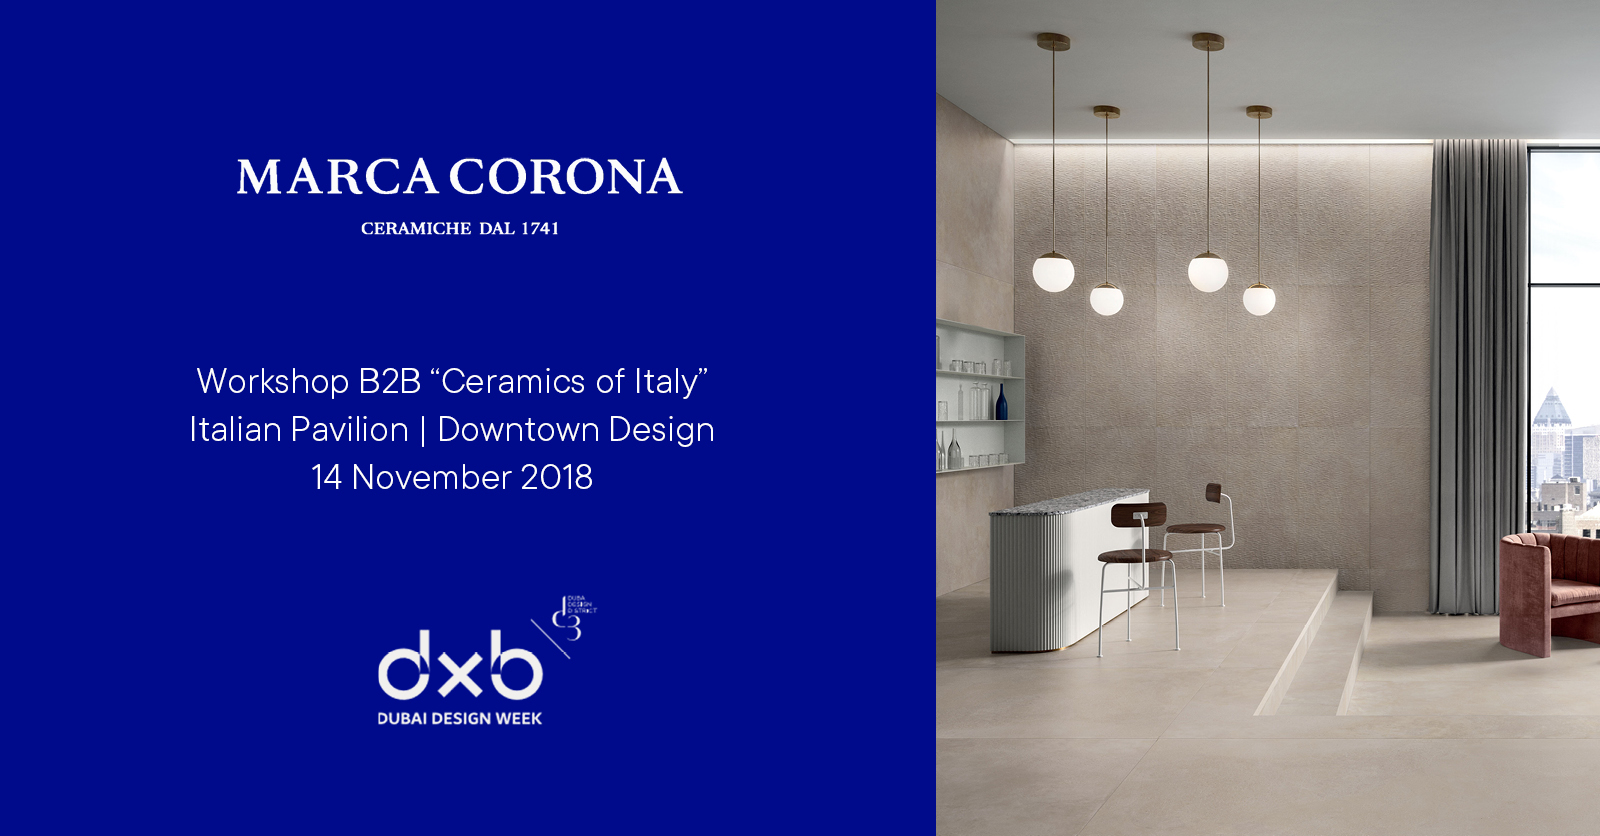 Marca Corona à Dubai Design Week 2018